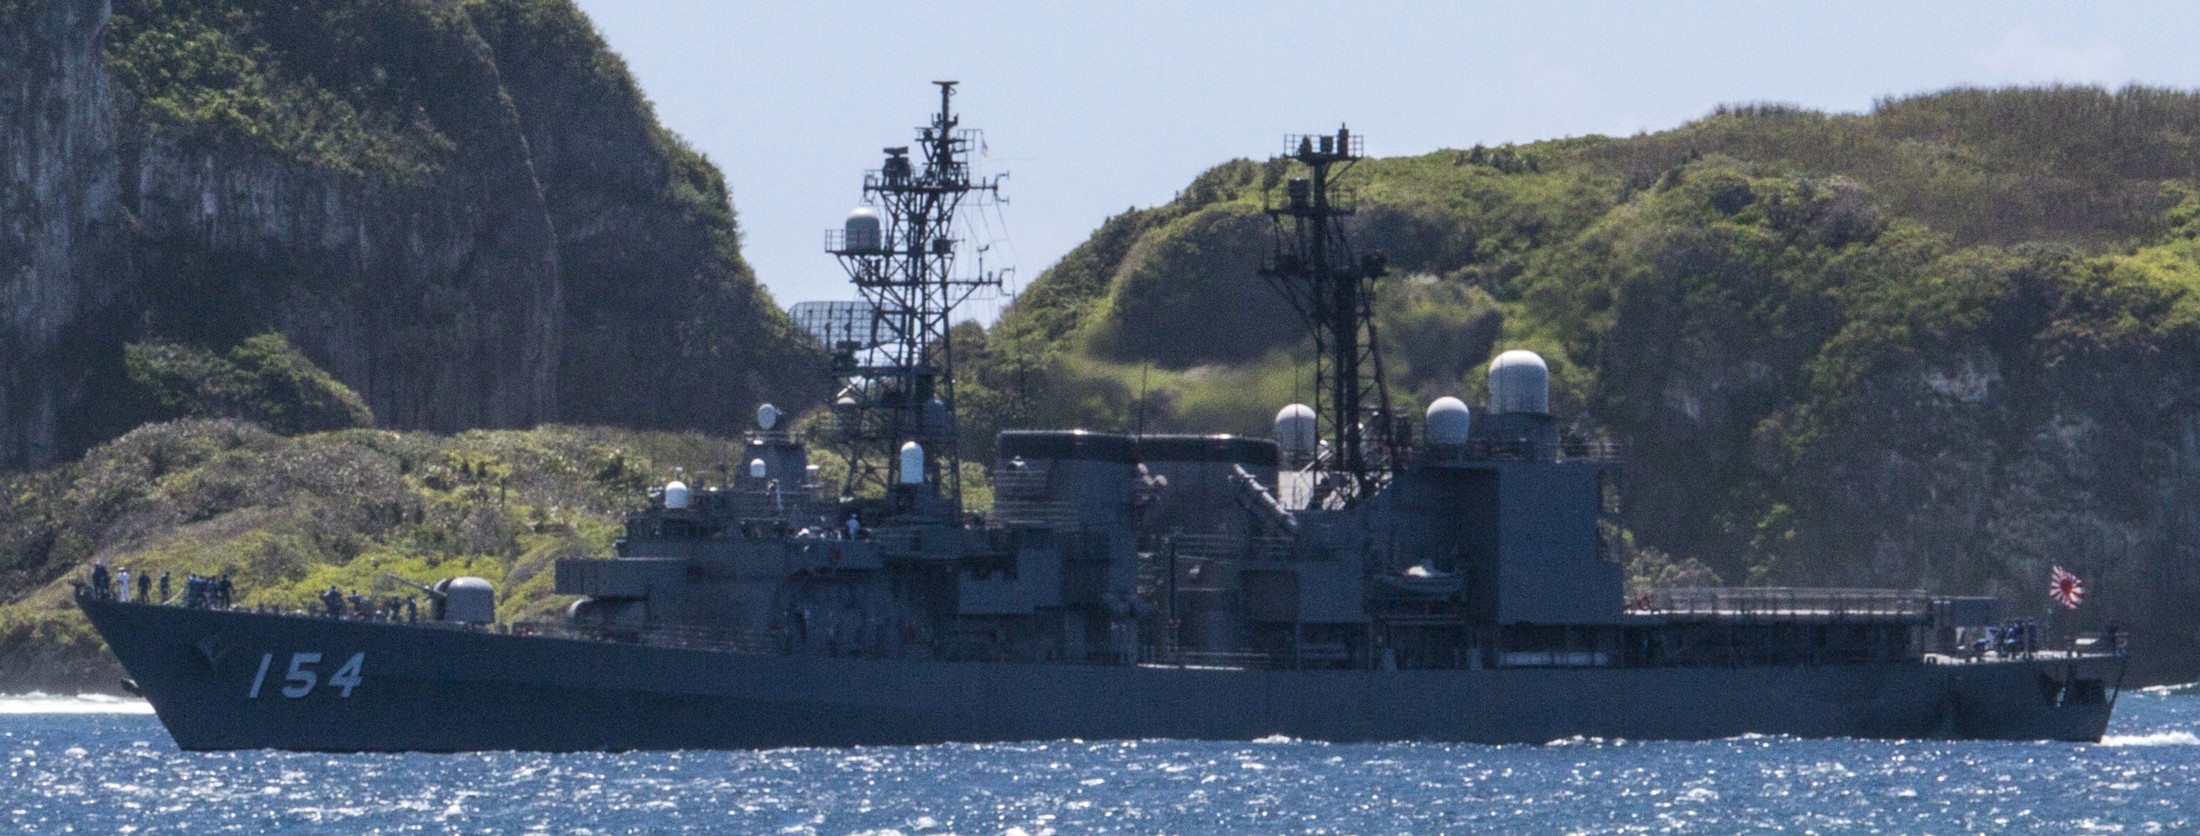 dd-154 js amagiri asagiri class destroyer japan maritime self defense force jmsdf apra harbor guam 09